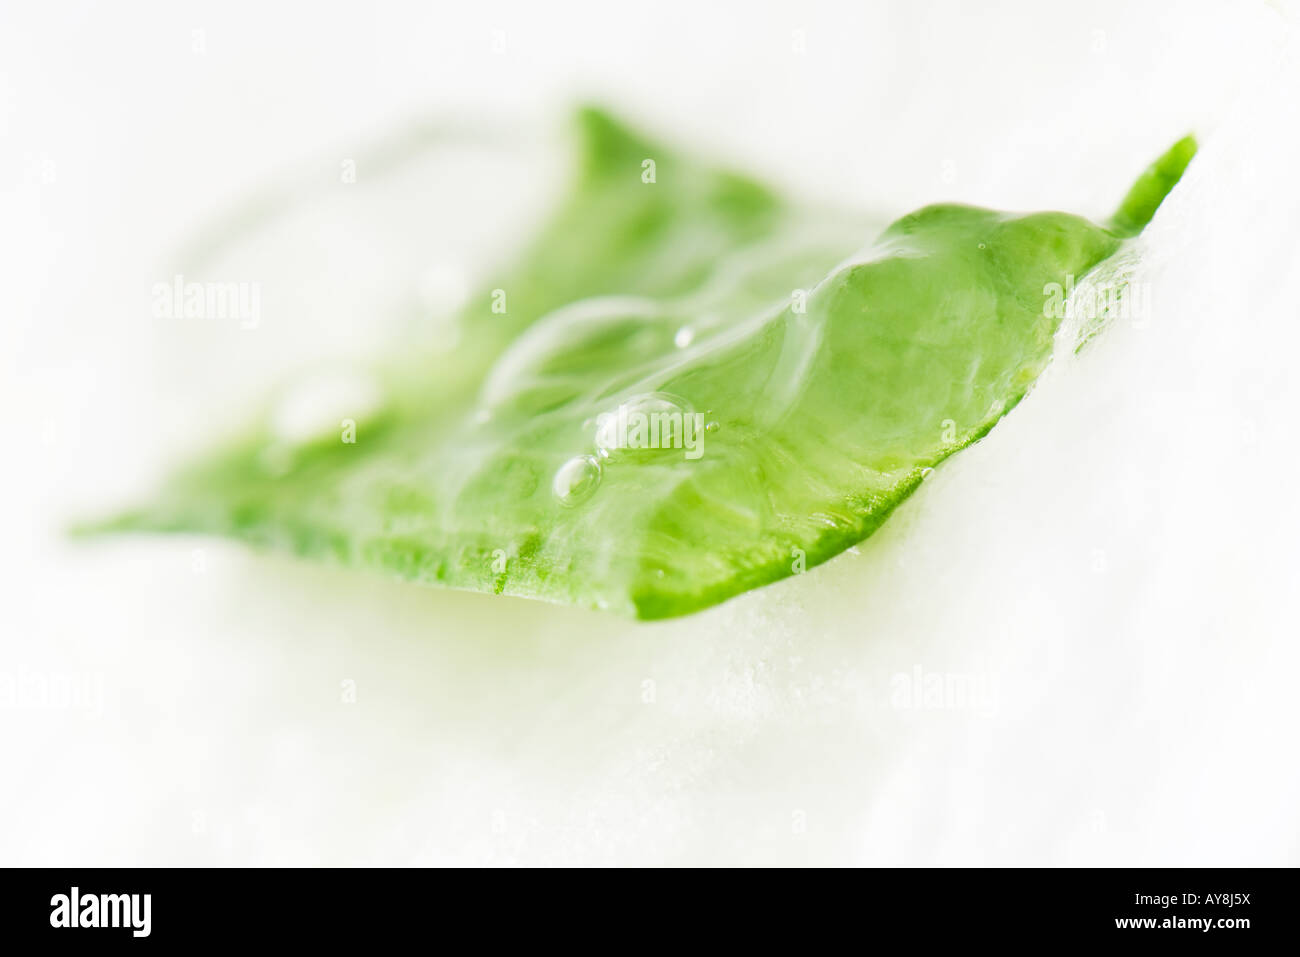 Sliced aloe vera leaf and gel, close-up Stock Photo